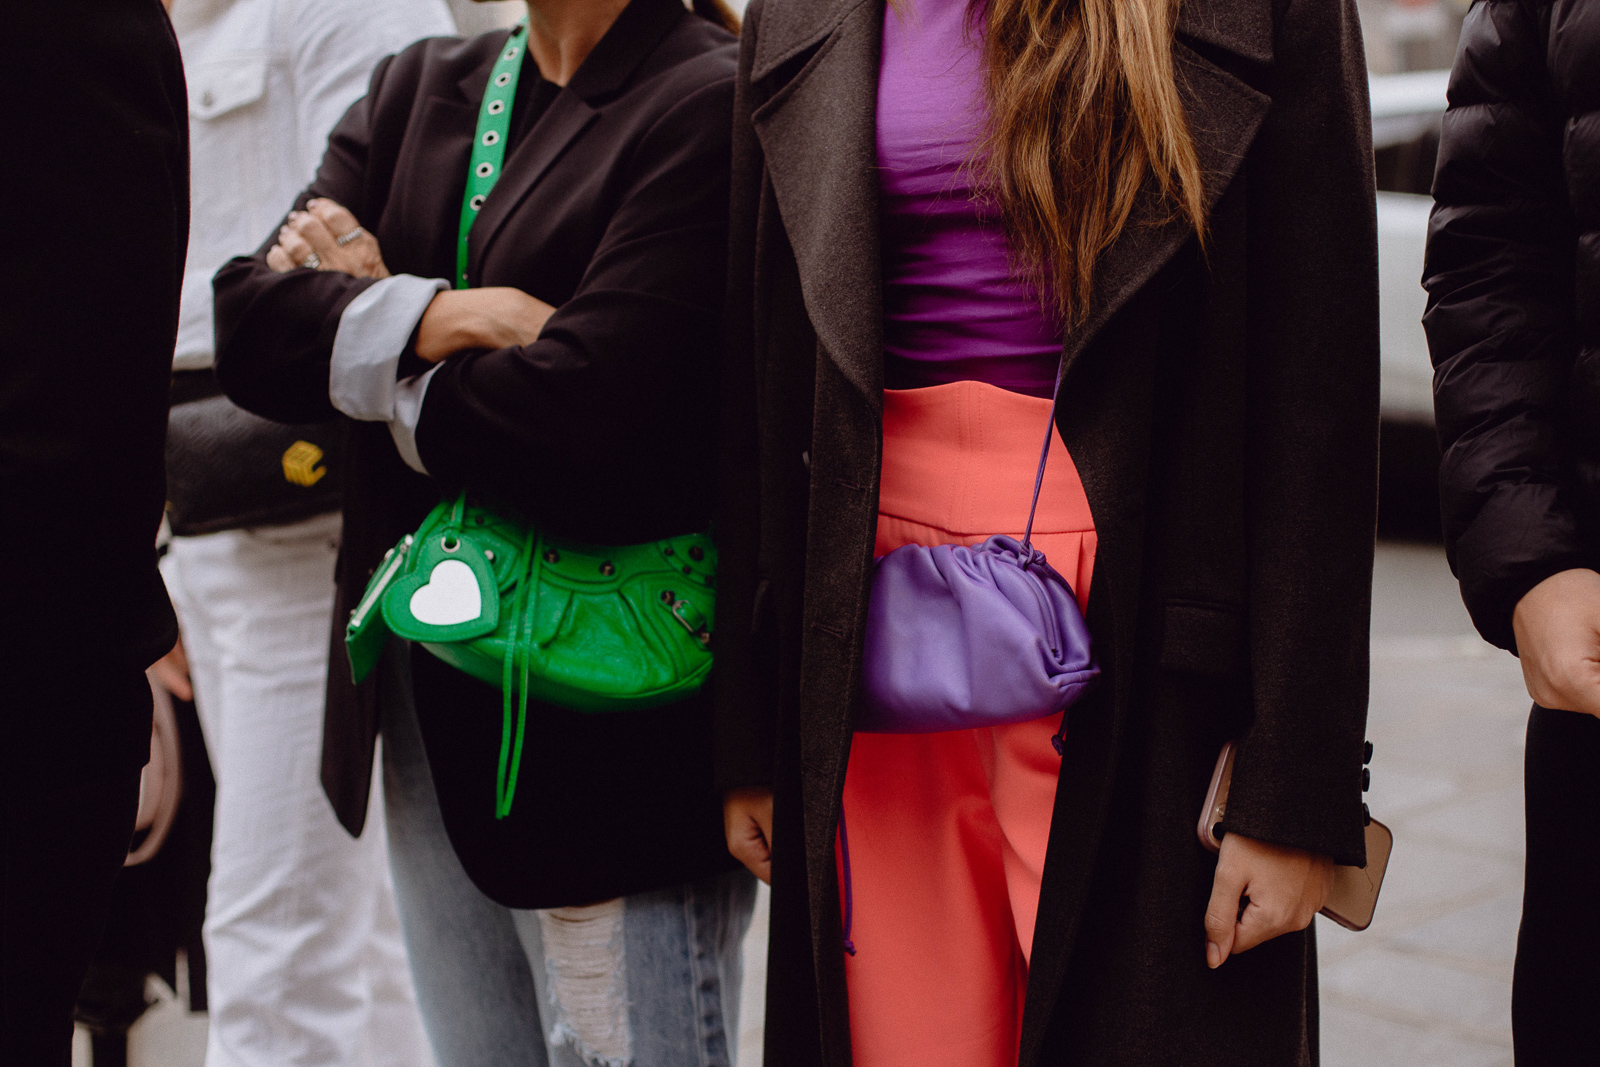 Balenciaga City Bag: From Street Style Sensation to Timeless